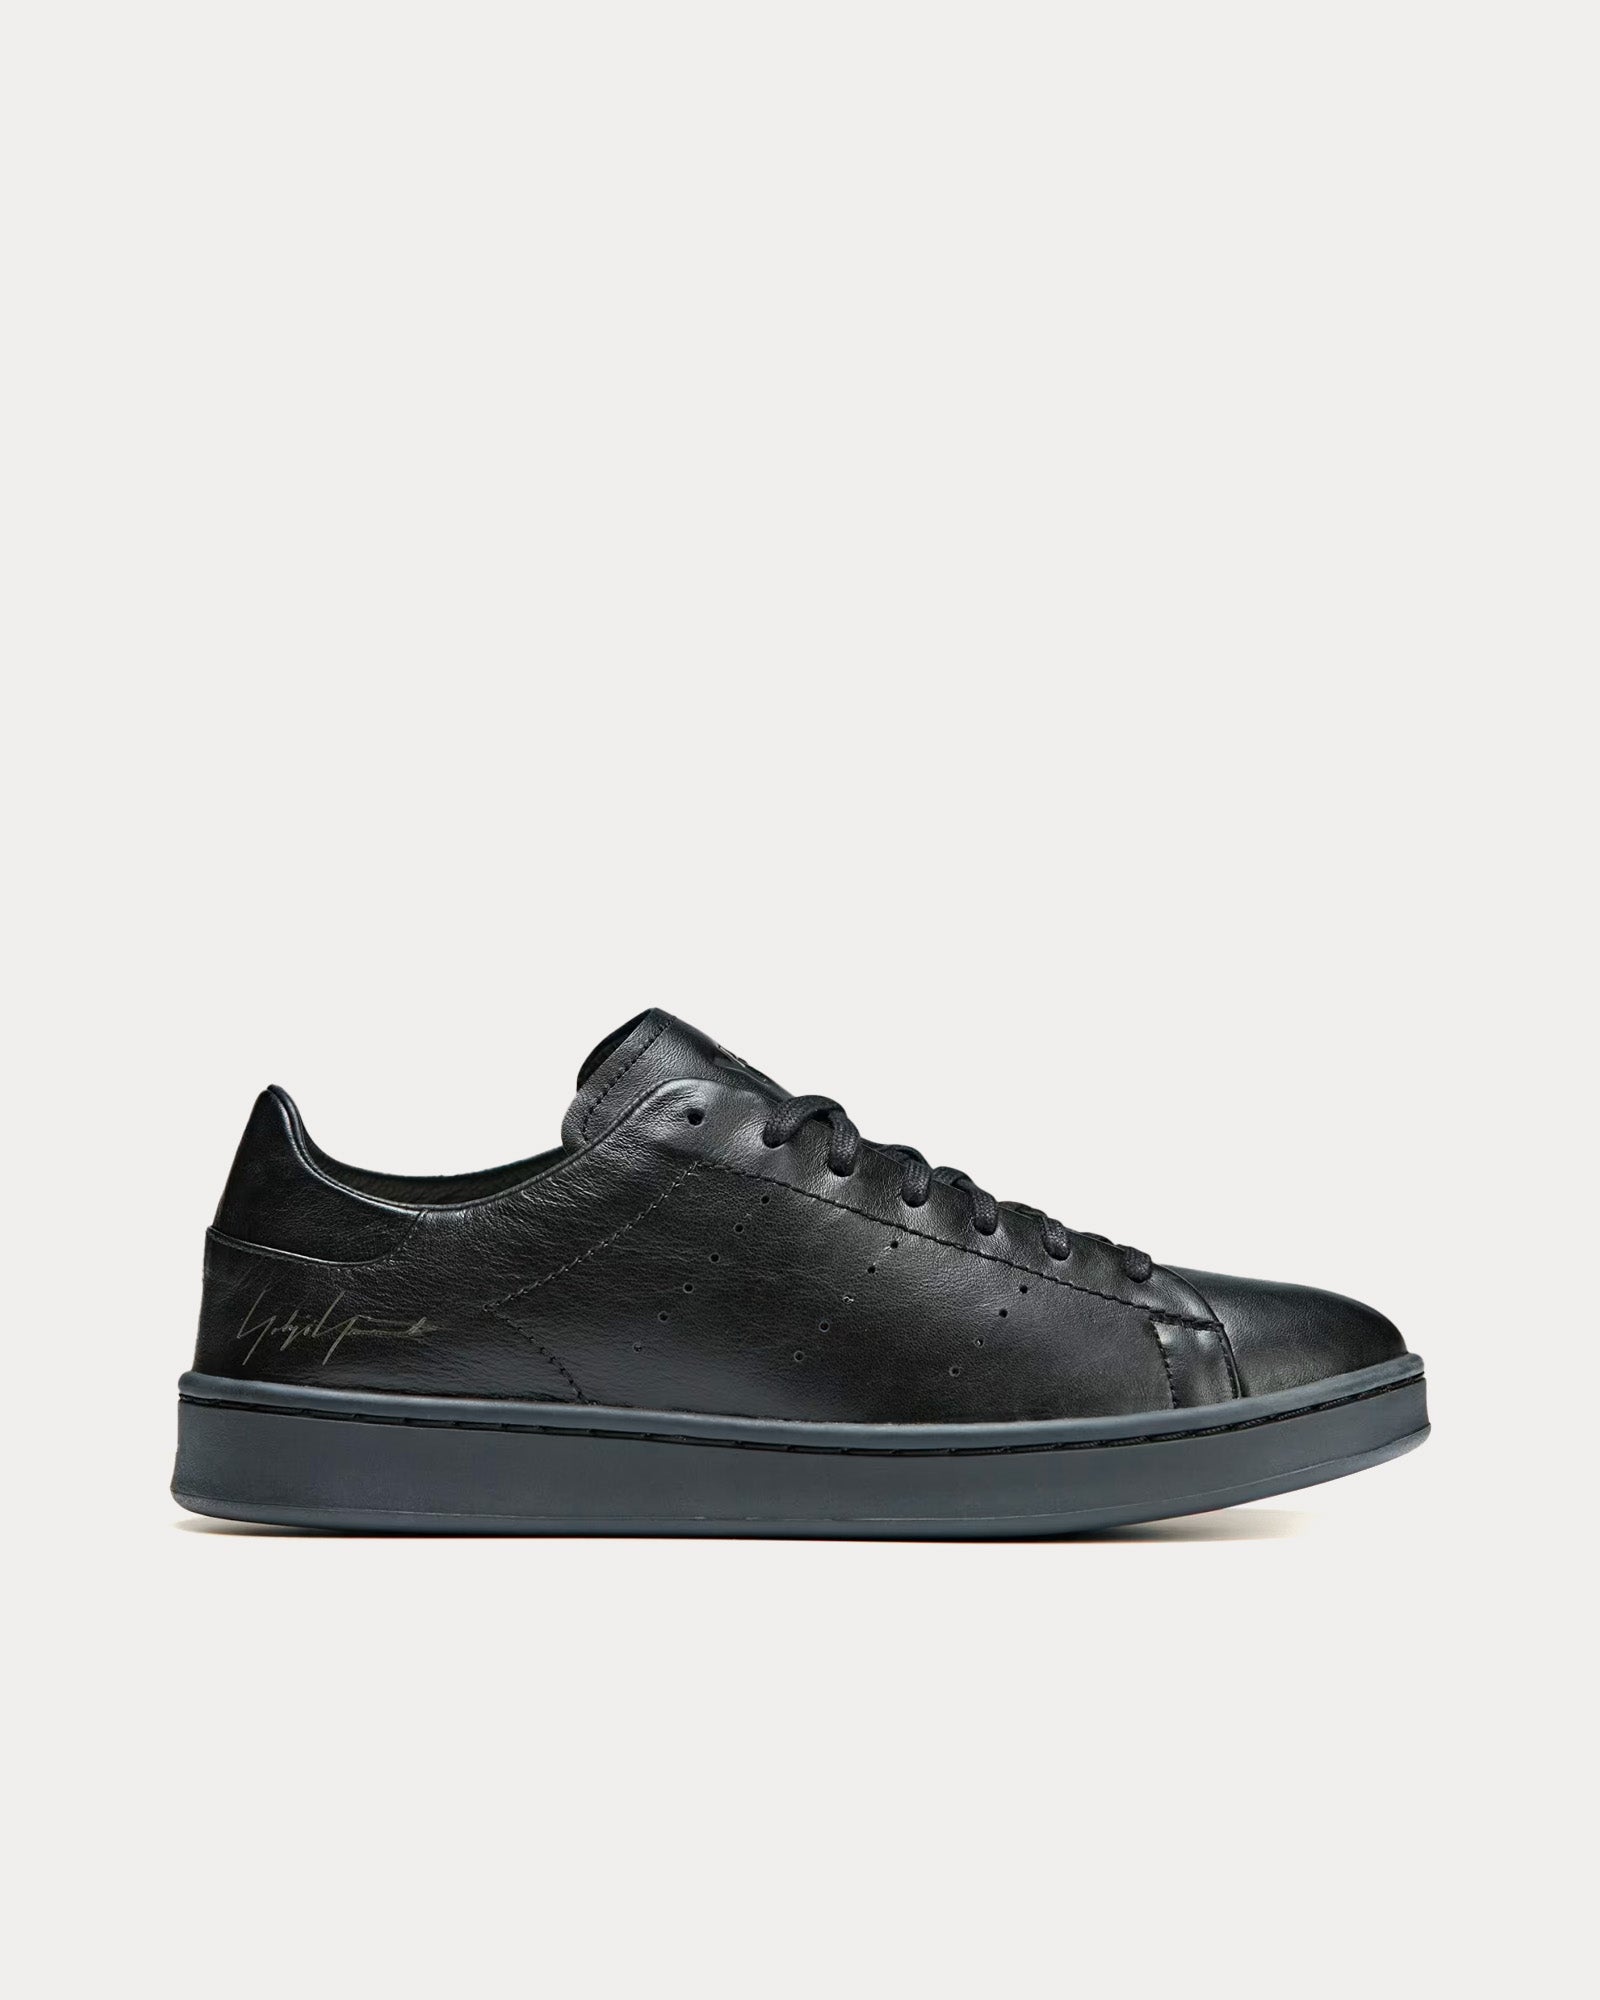 Y-3 - Stan Smith Leather Black / Black / Black Low Top Sneakers